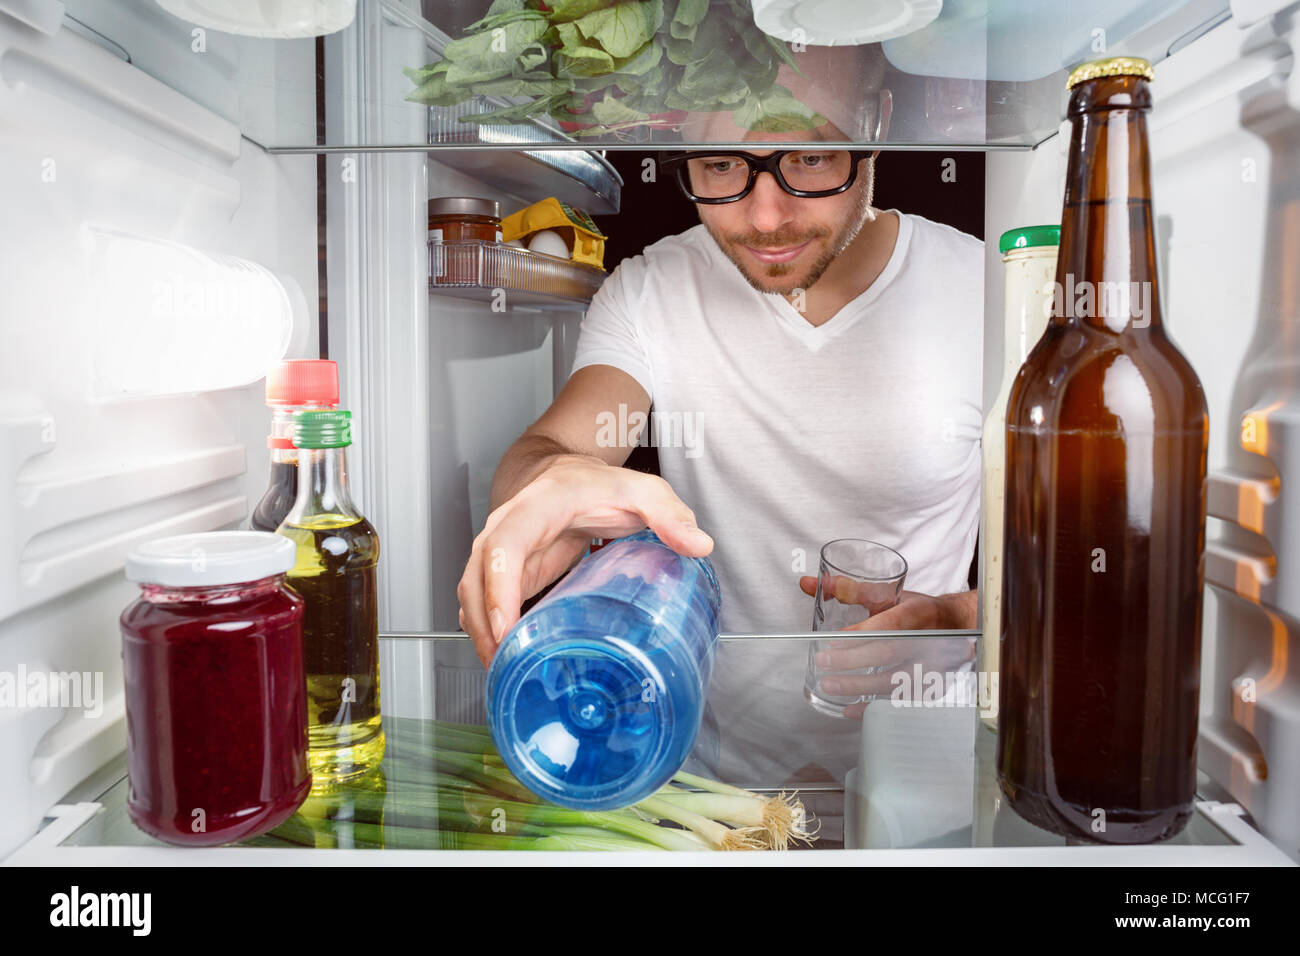 https://c8.alamy.com/comp/MCG1F7/man-grabbing-a-water-bottle-in-the-fridge-MCG1F7.jpg